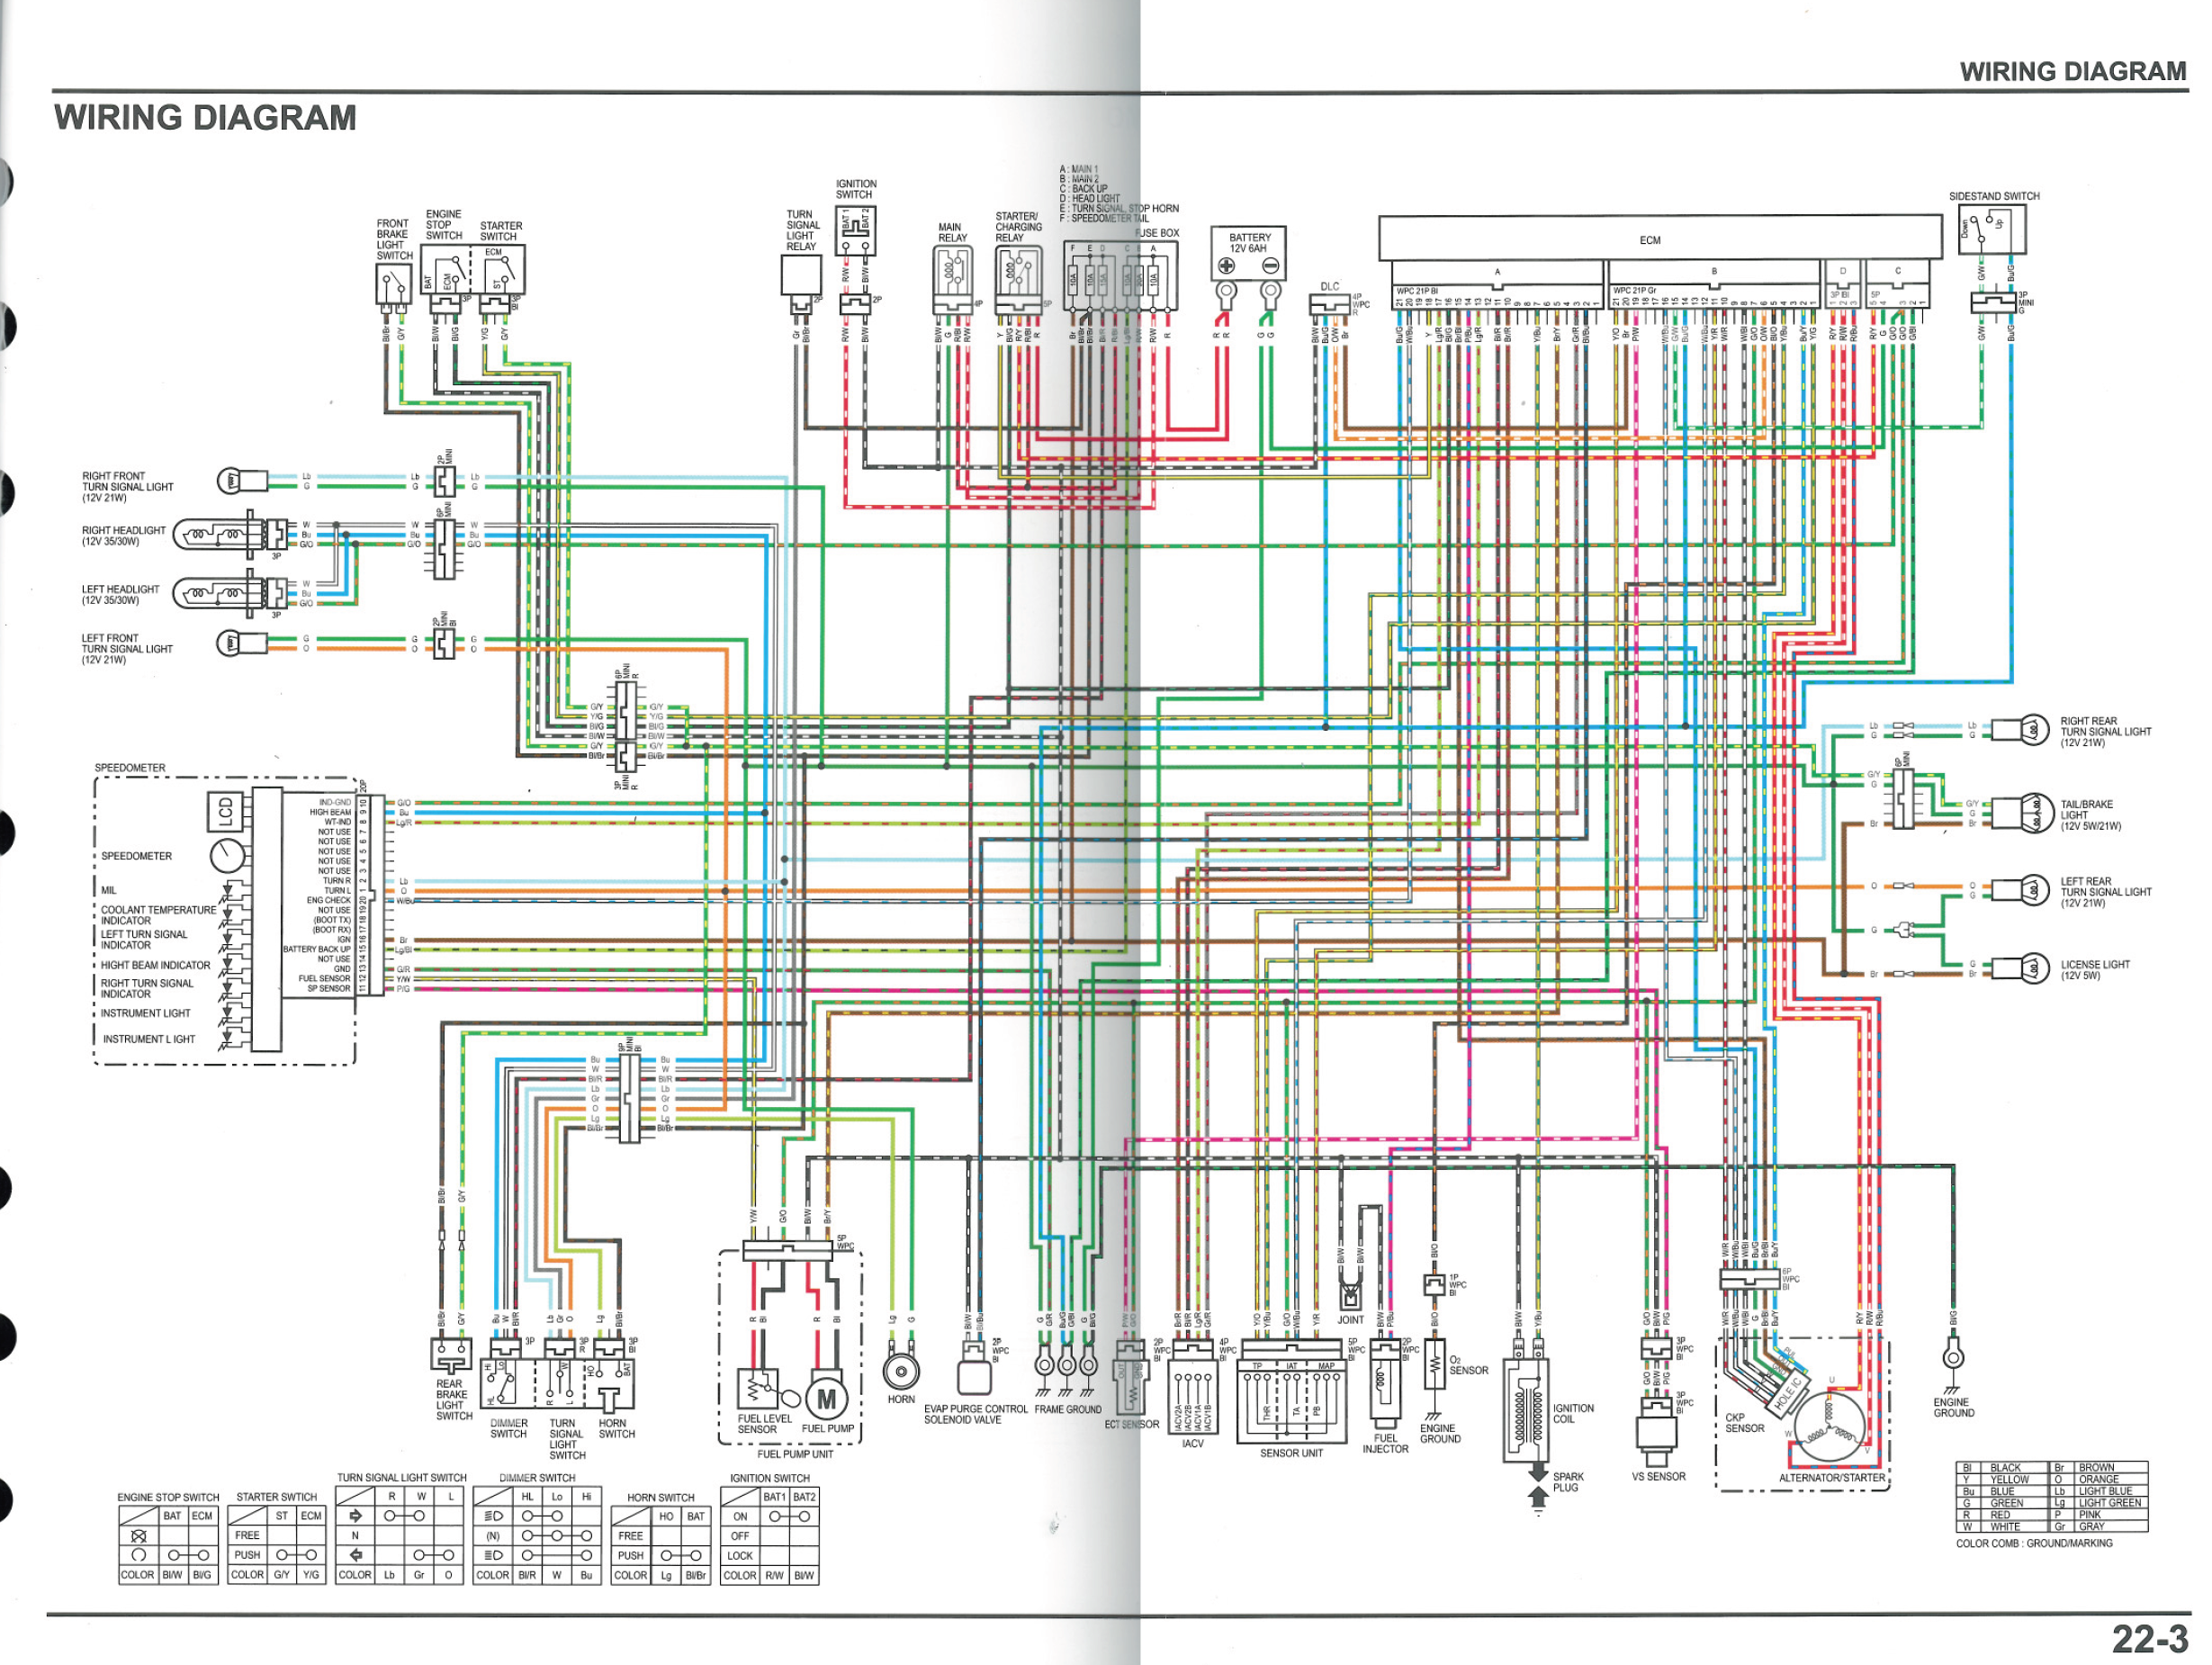 Honda PCX Wiring Diagram.png